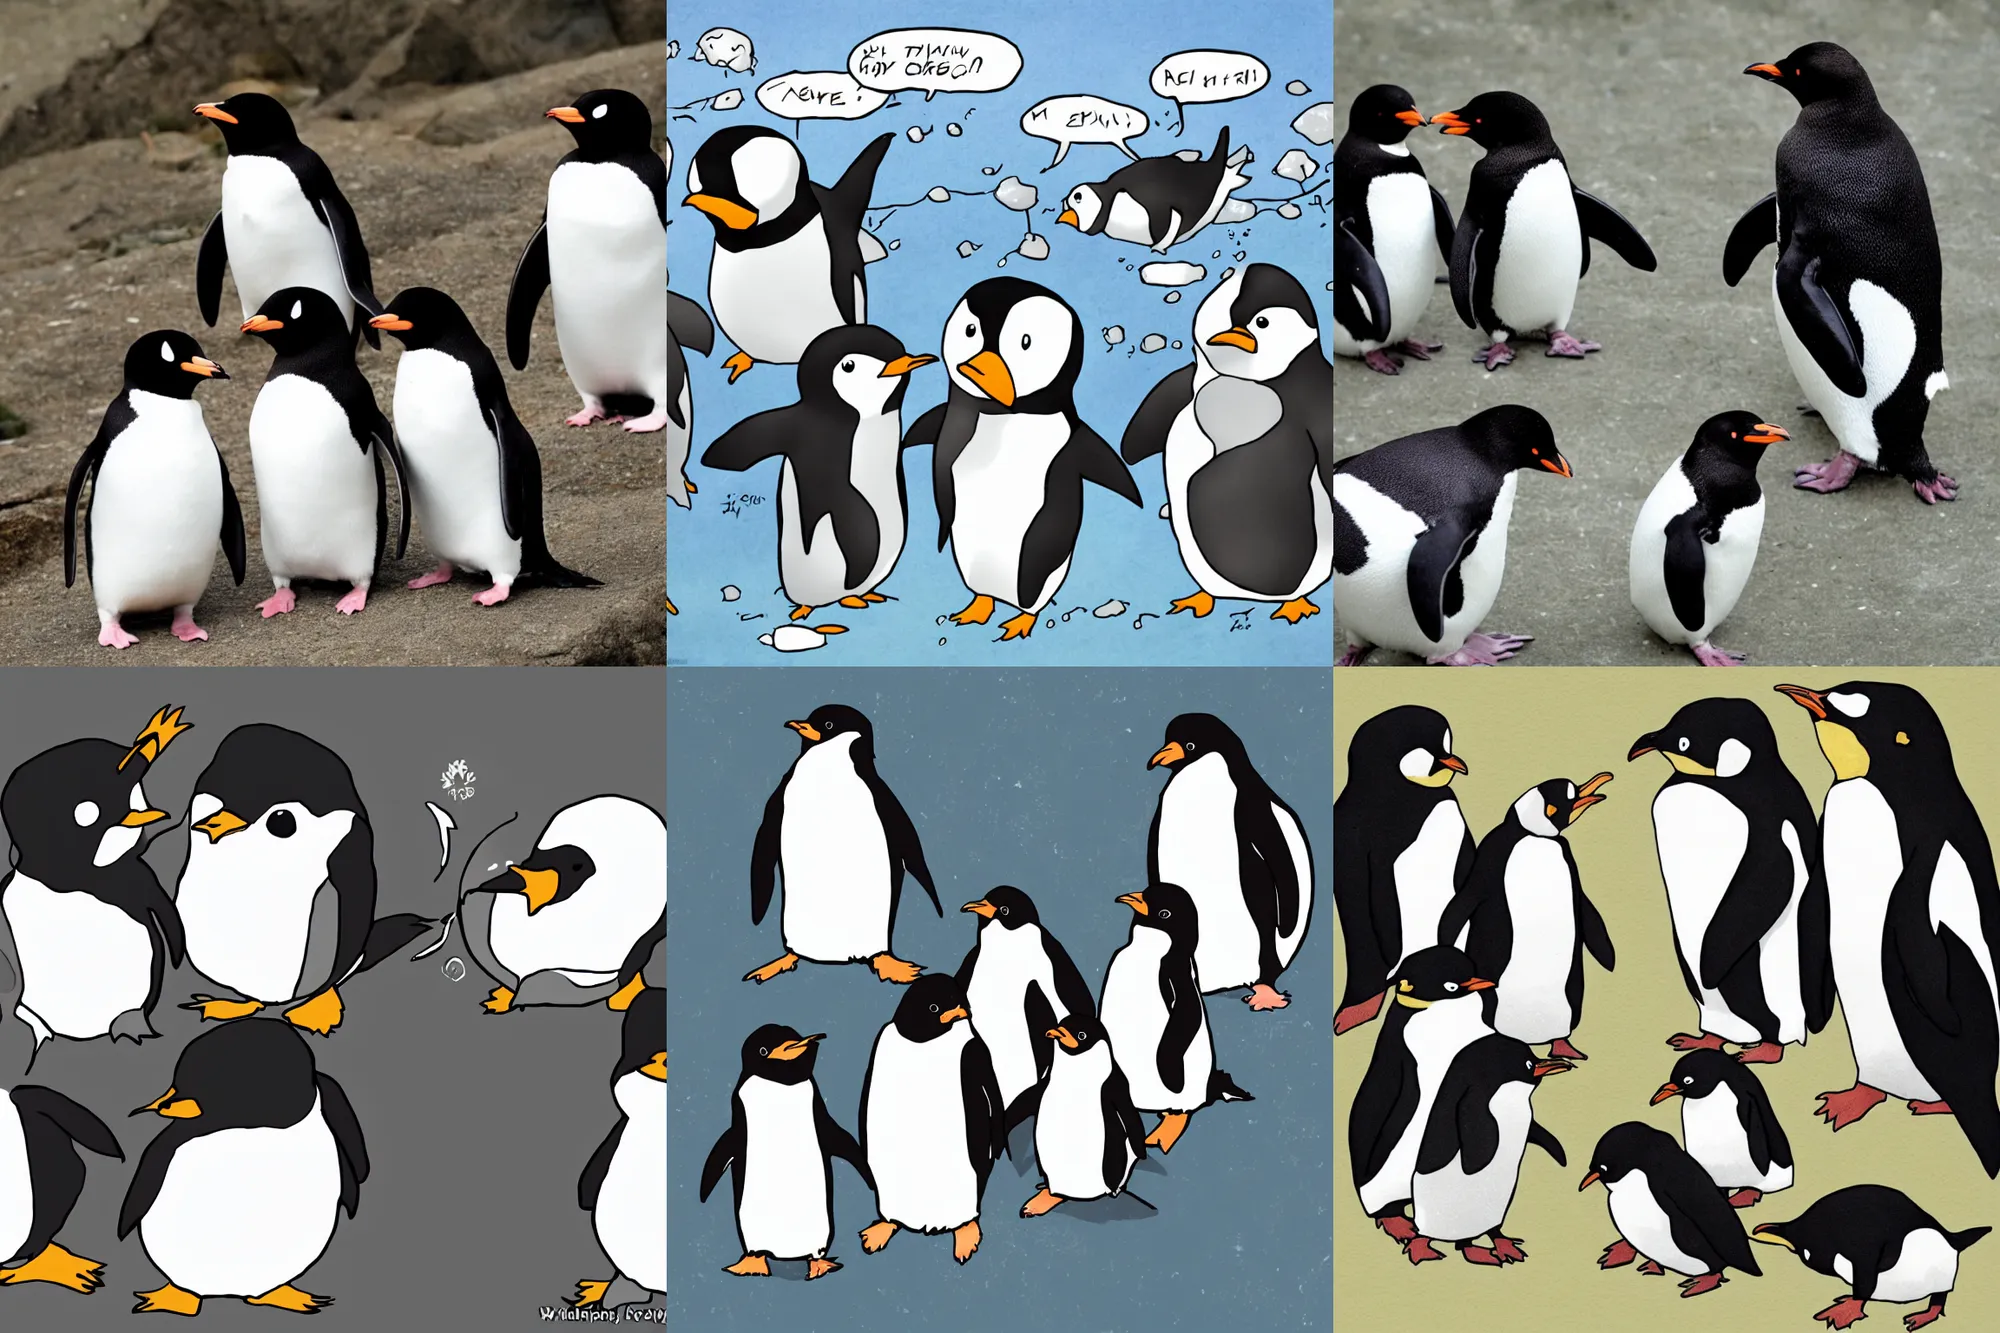 Prompt: chibi anime penguins in conversation